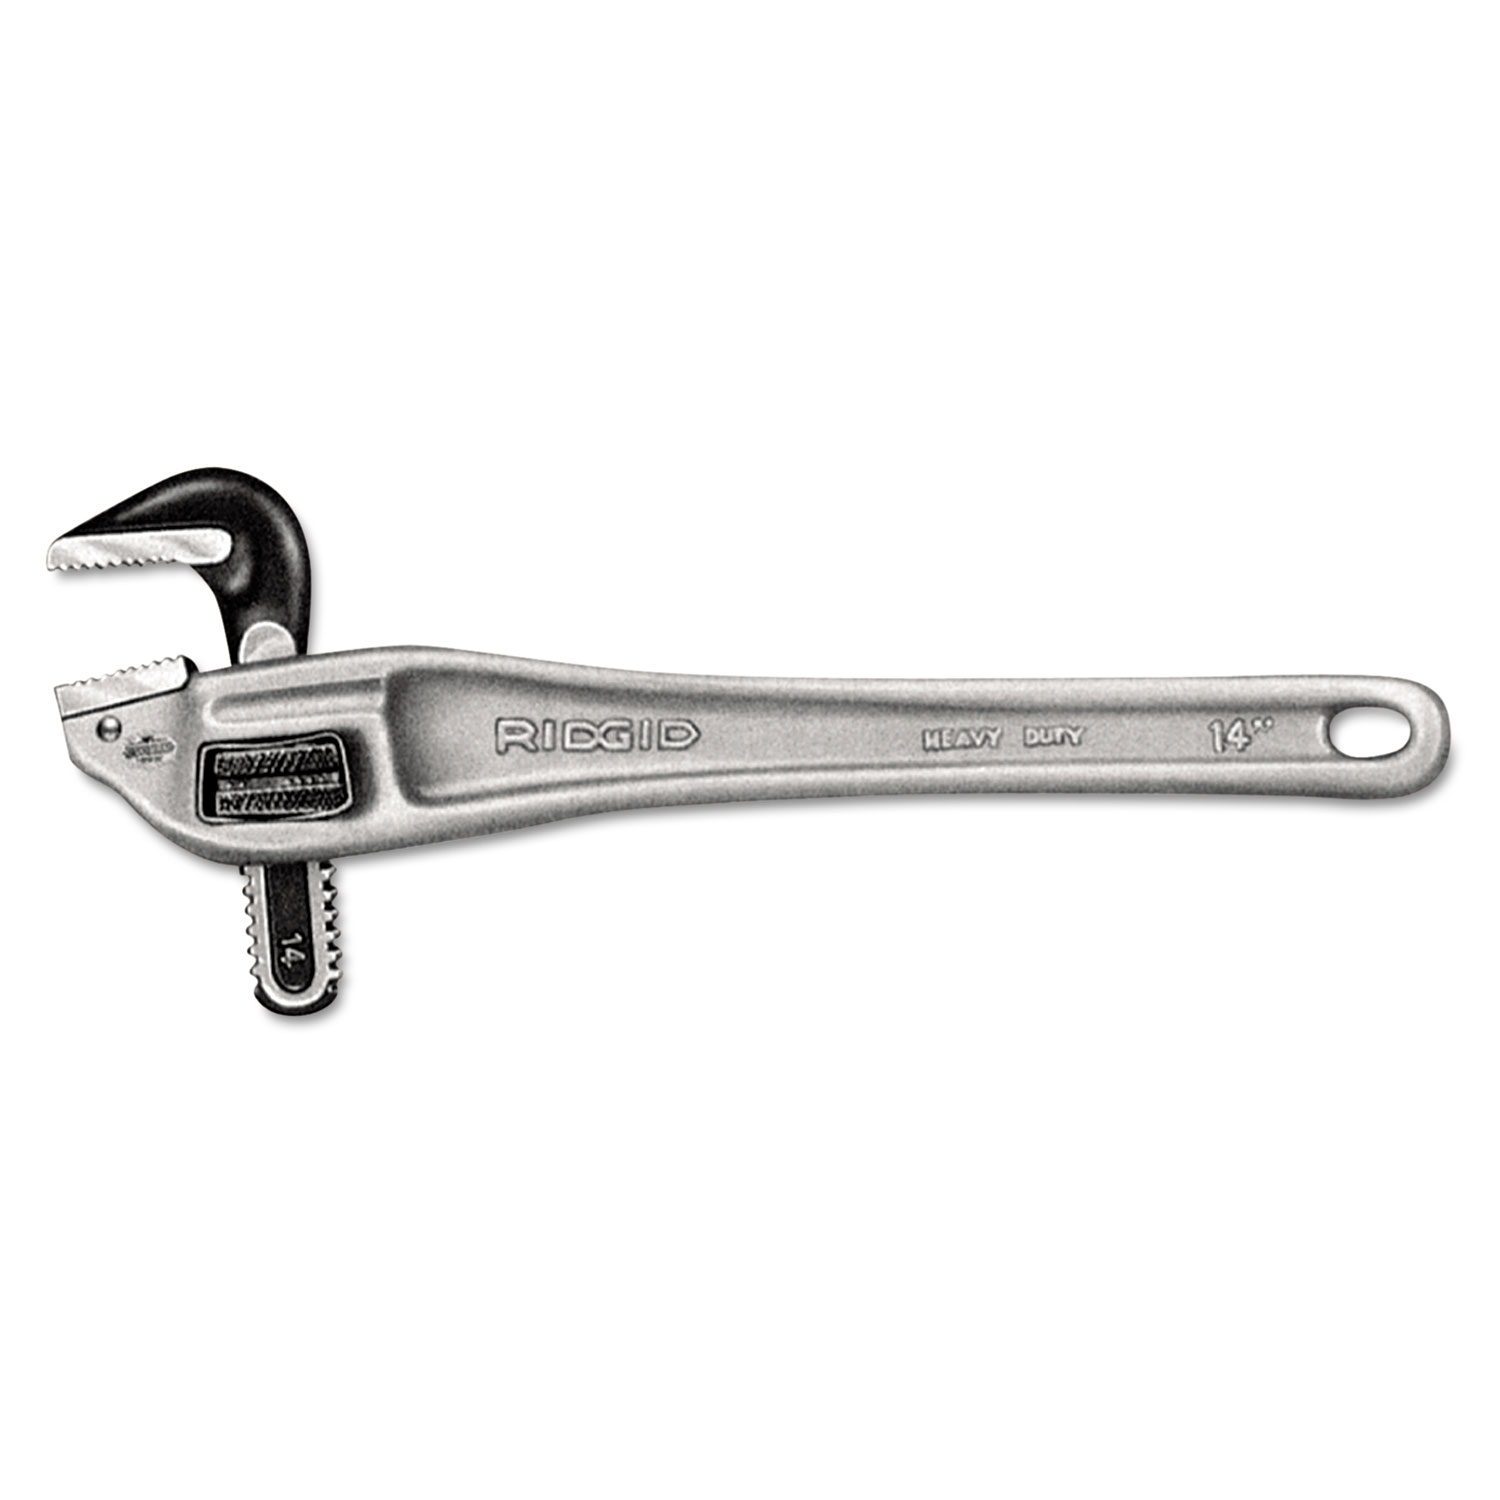 RIDGID Aluminum Handle Offset Pipe Wrench, 14 Long, 2 Jaw Capacity